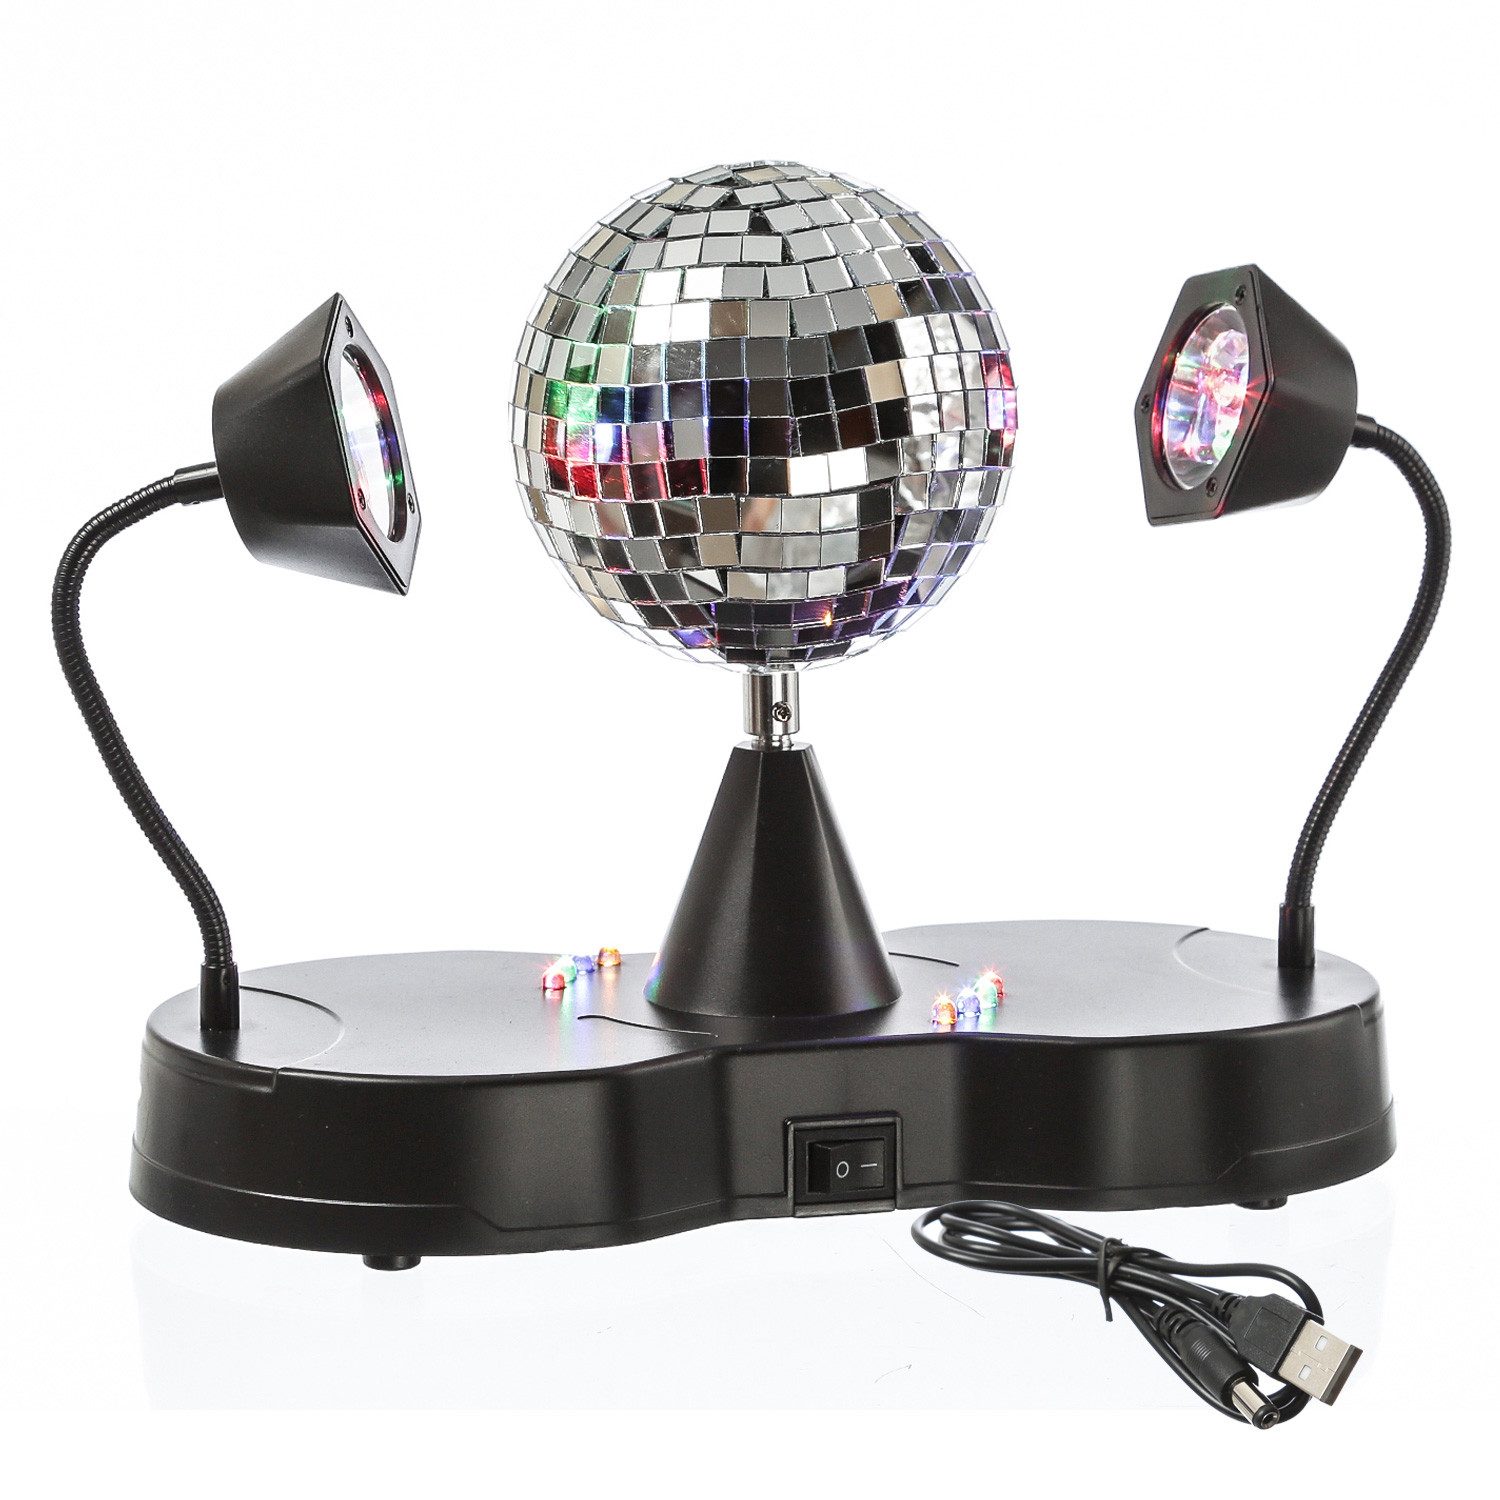 SATISFIRE Discolicht Spiegelkugel 2 LED Schwanenhals Spots Party Disco Effekt USB/Batterie, LED Classic, RGBA (rot, grün, blau, amber)